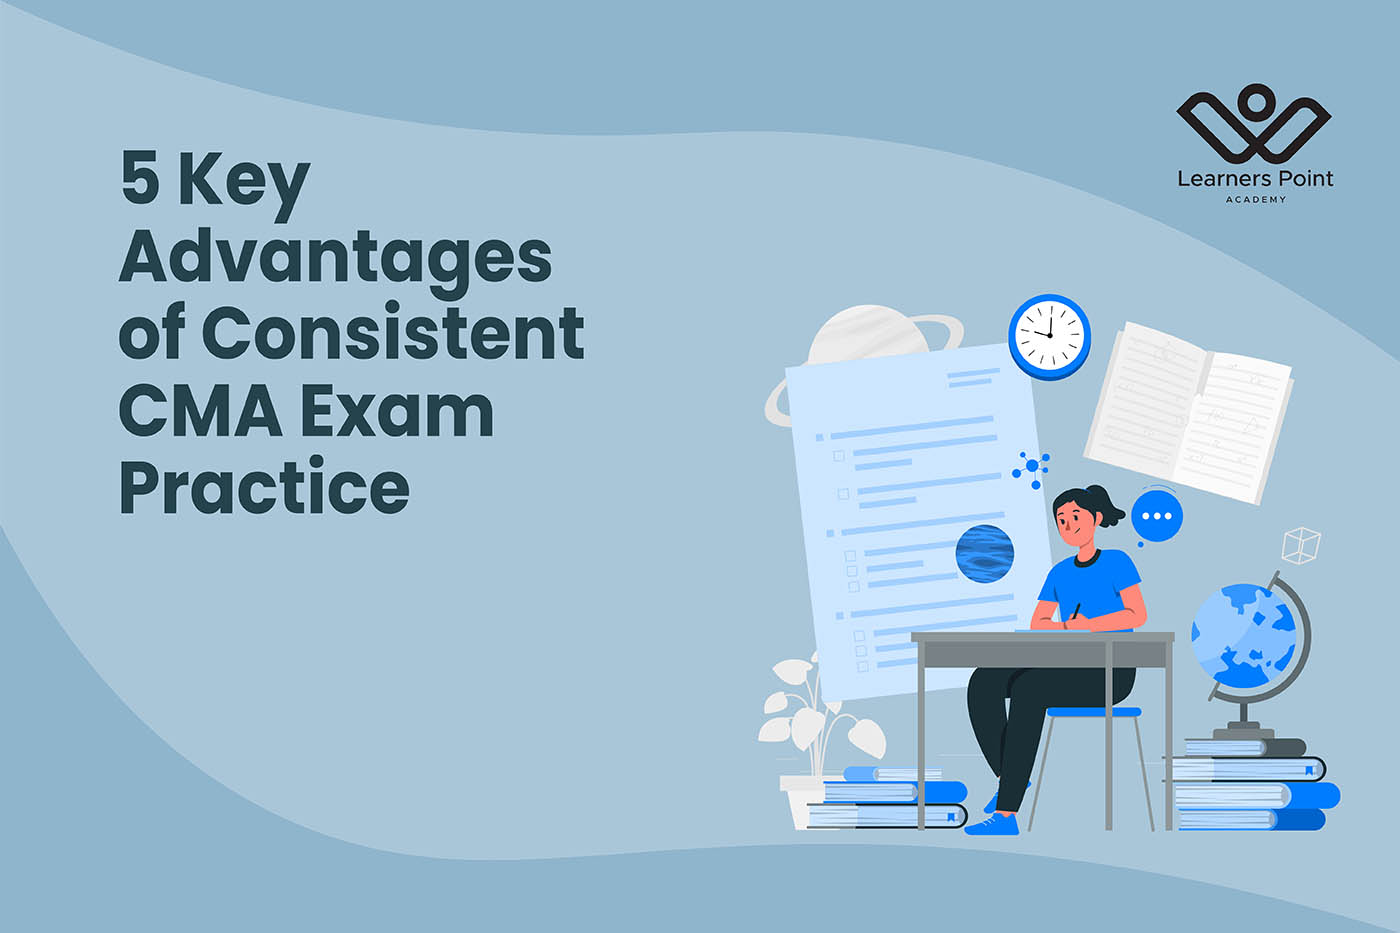 5 Key Advantages of Consistent CMA Exam Practice